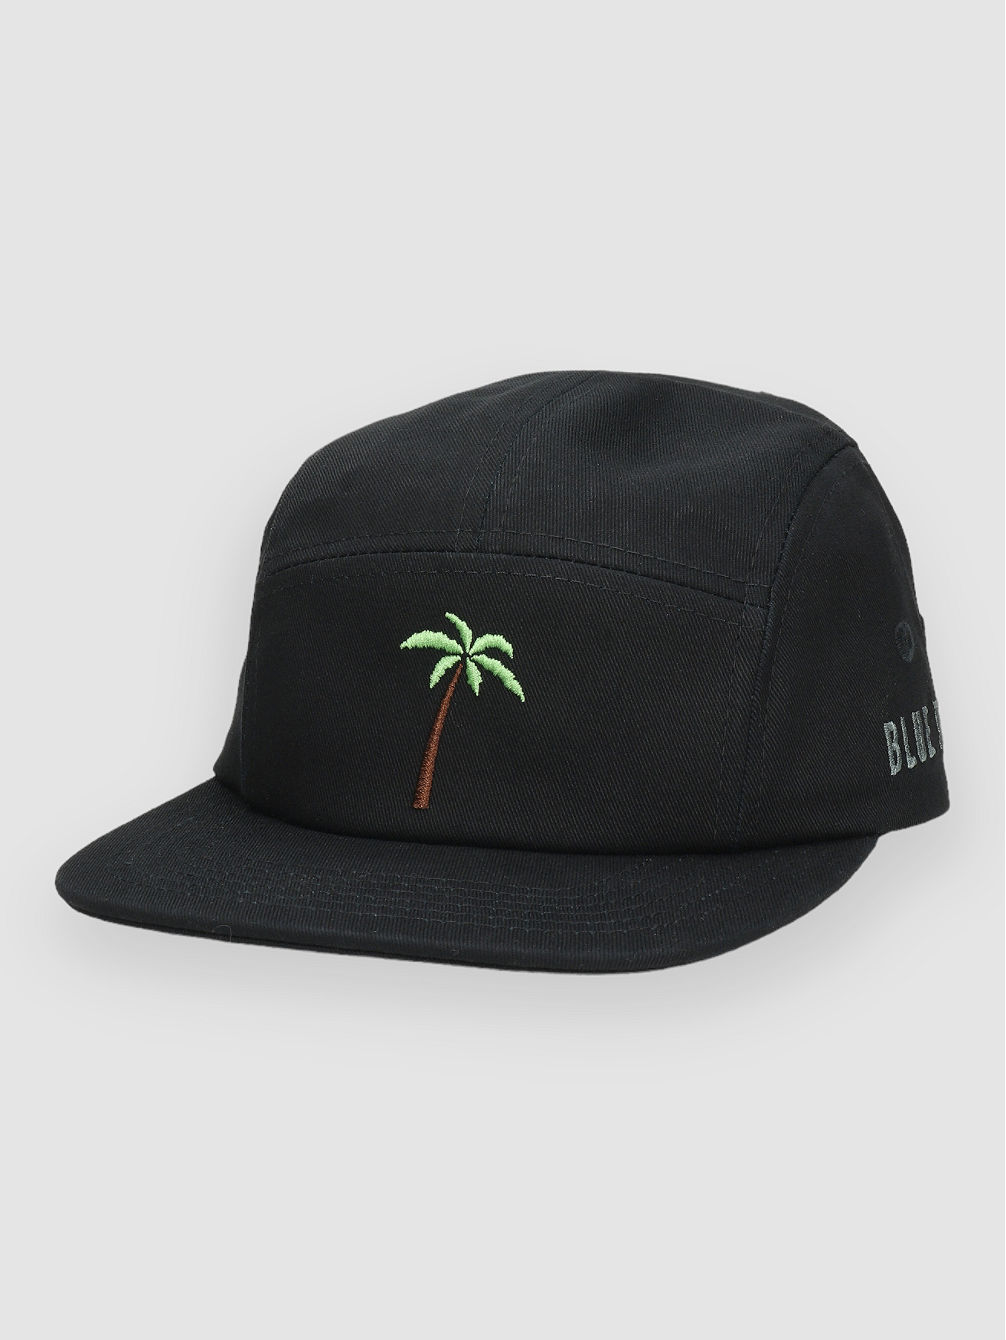 The Palms Caps